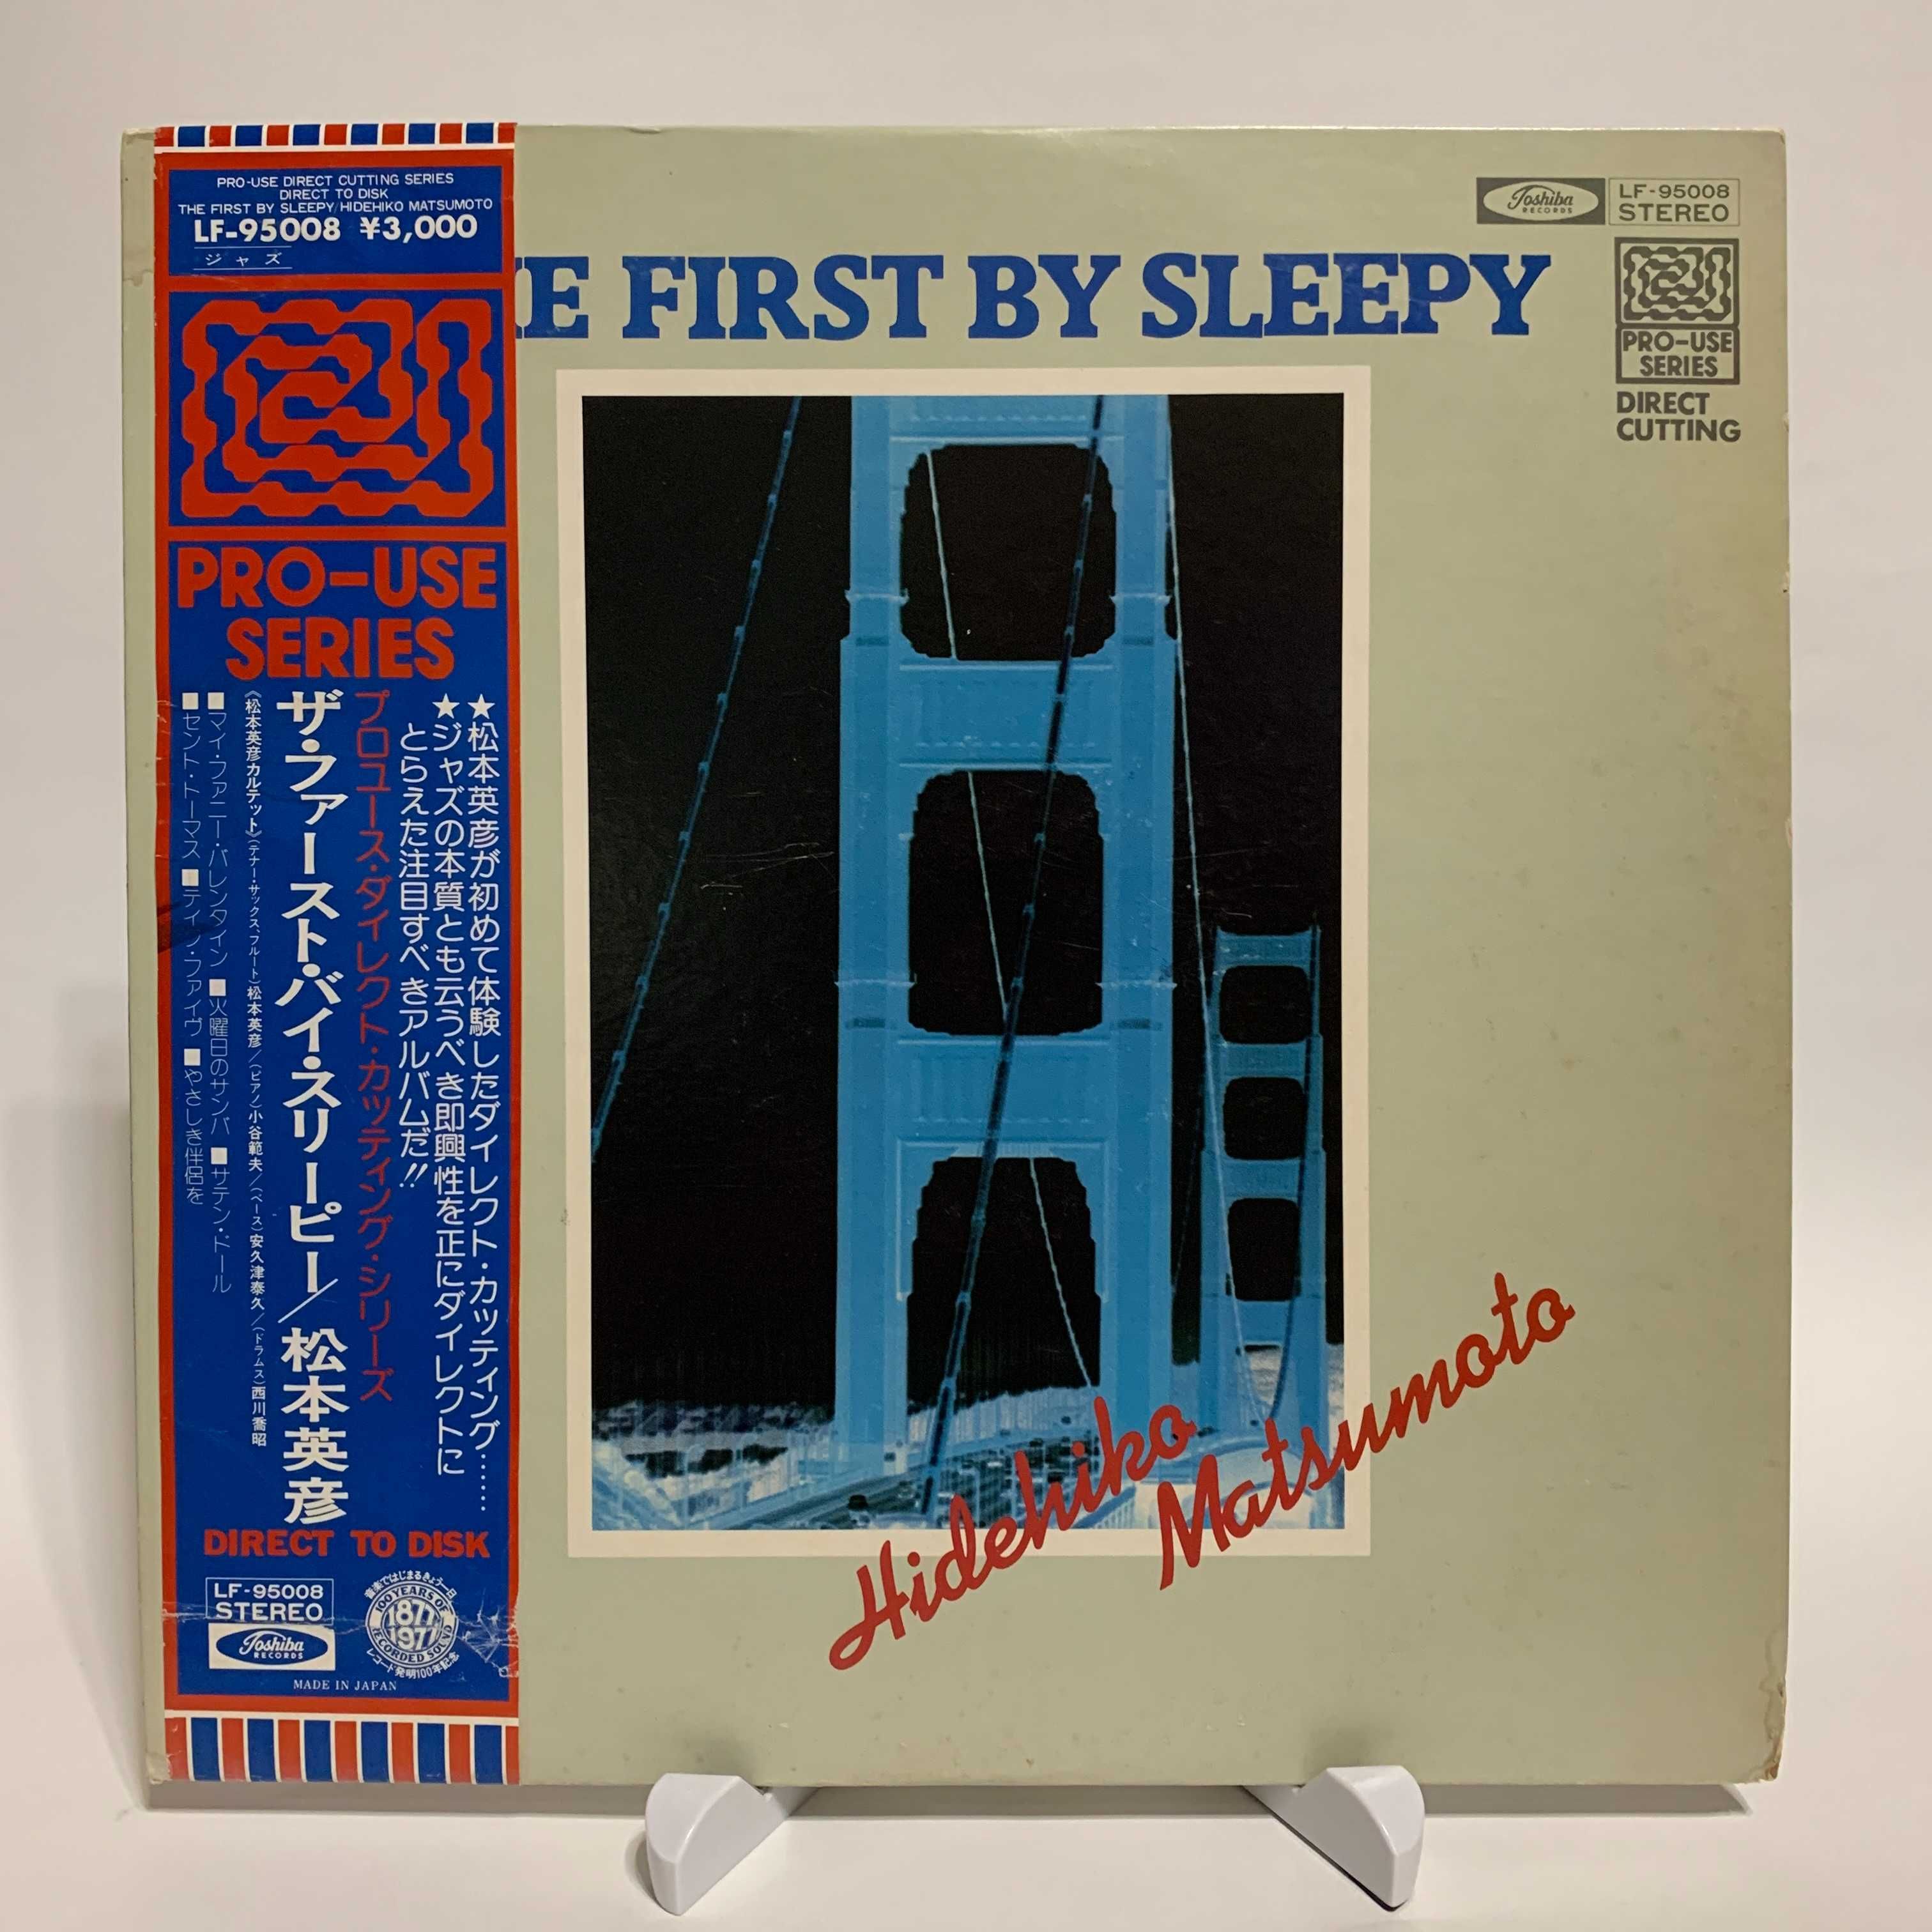 Vinyl Вініл Платівка Jazz Джаз Hidehiko Matsumoto First By Sleepy